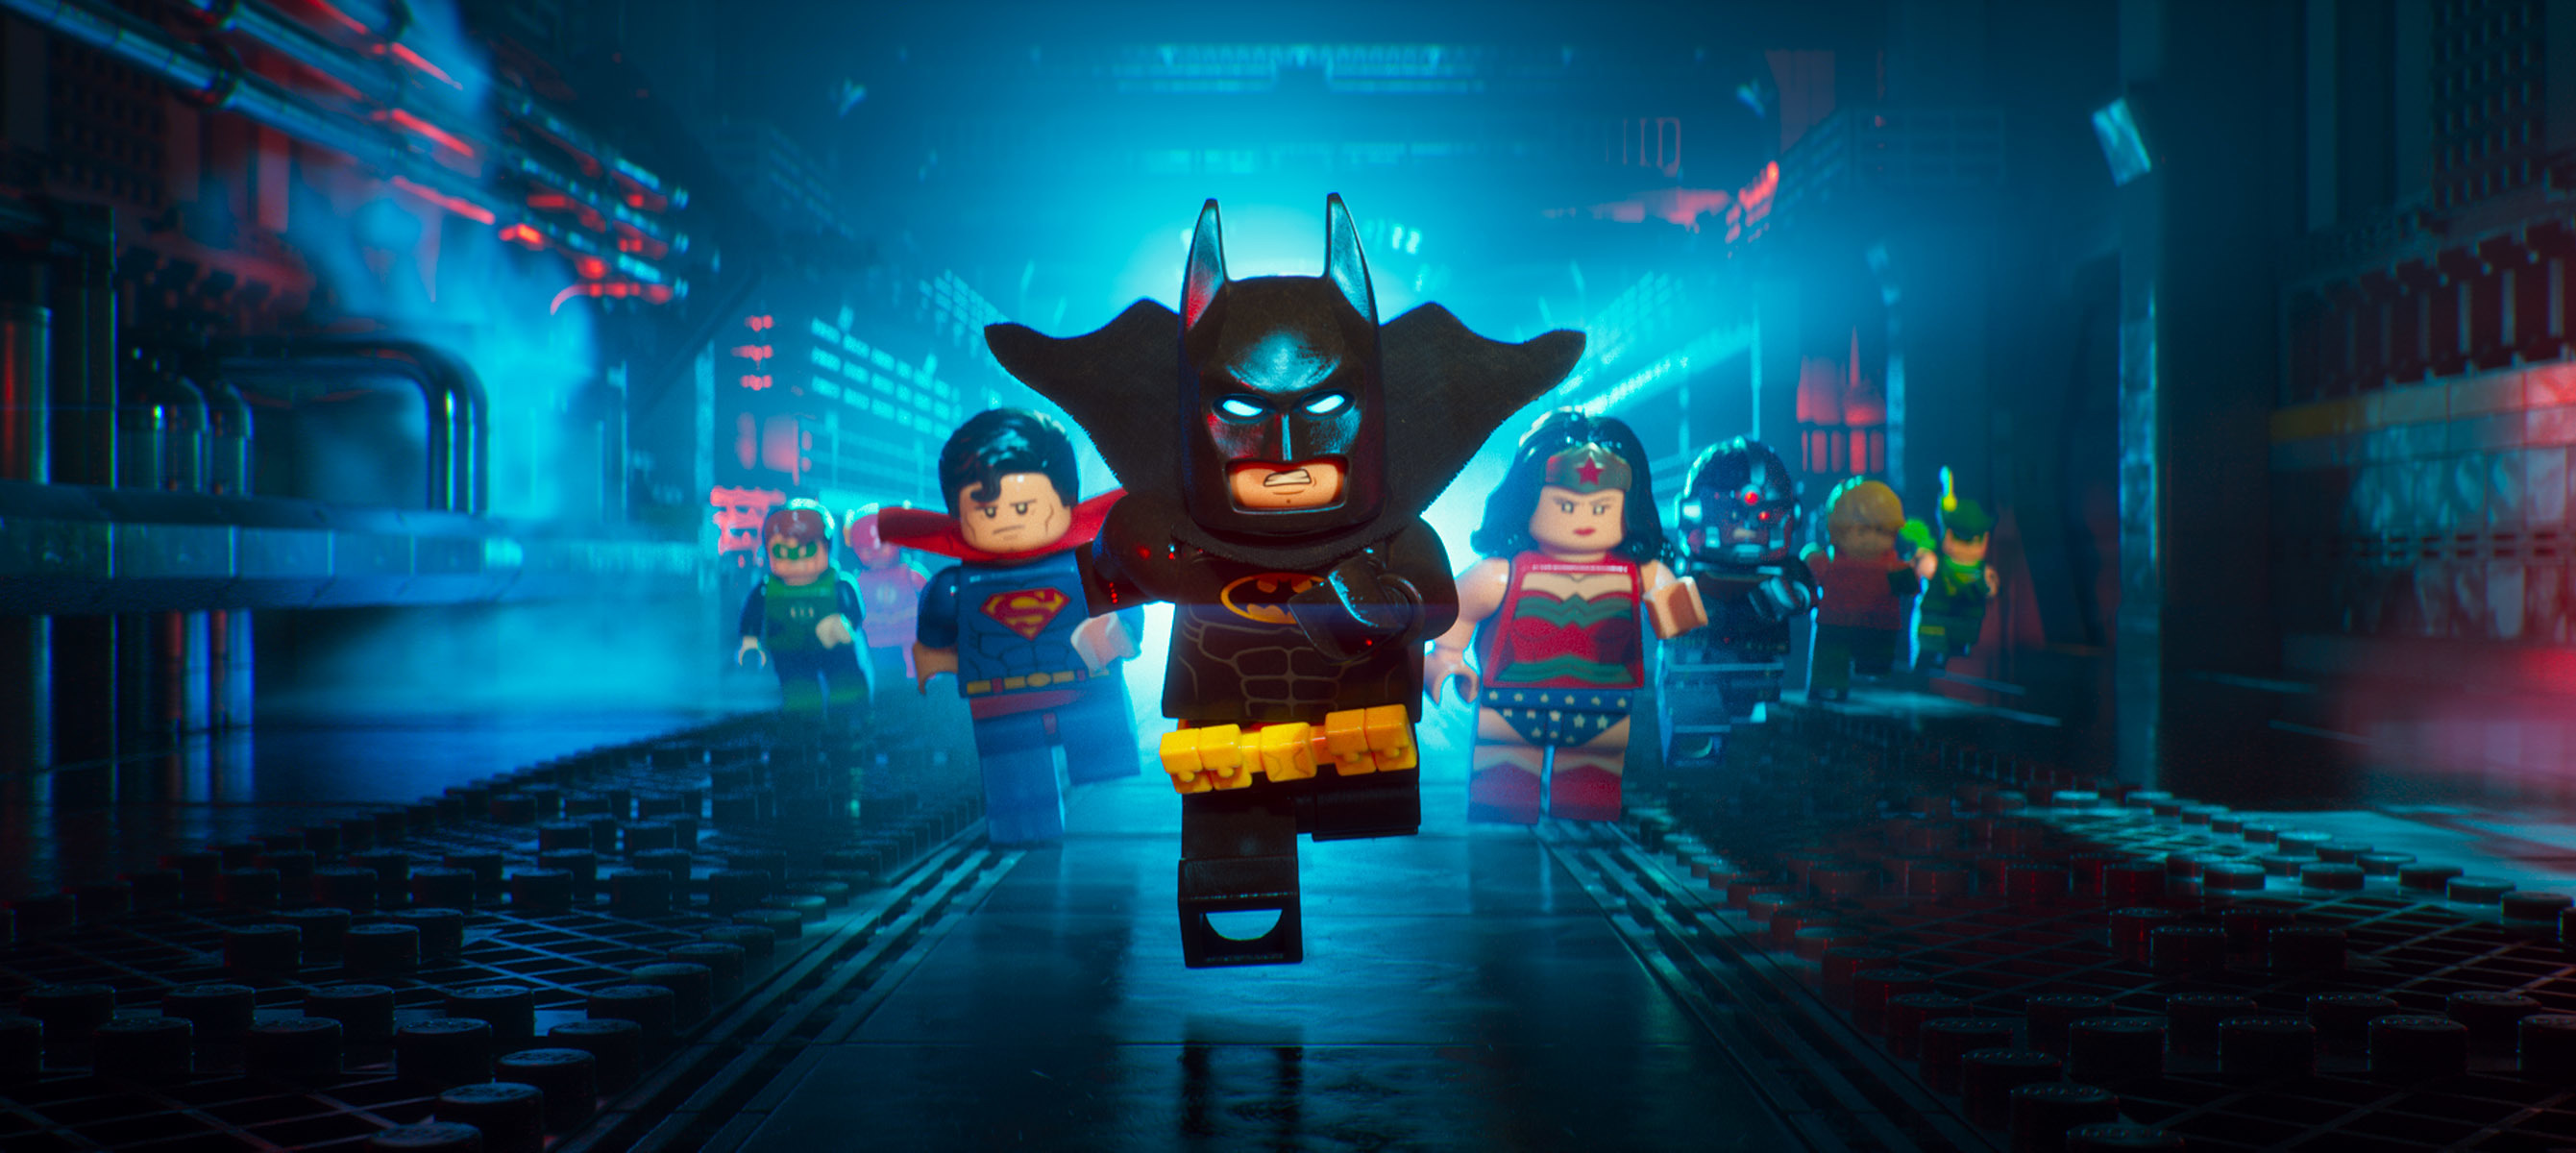 The Lego Batman Movie review: The best Batman movie since The Dark